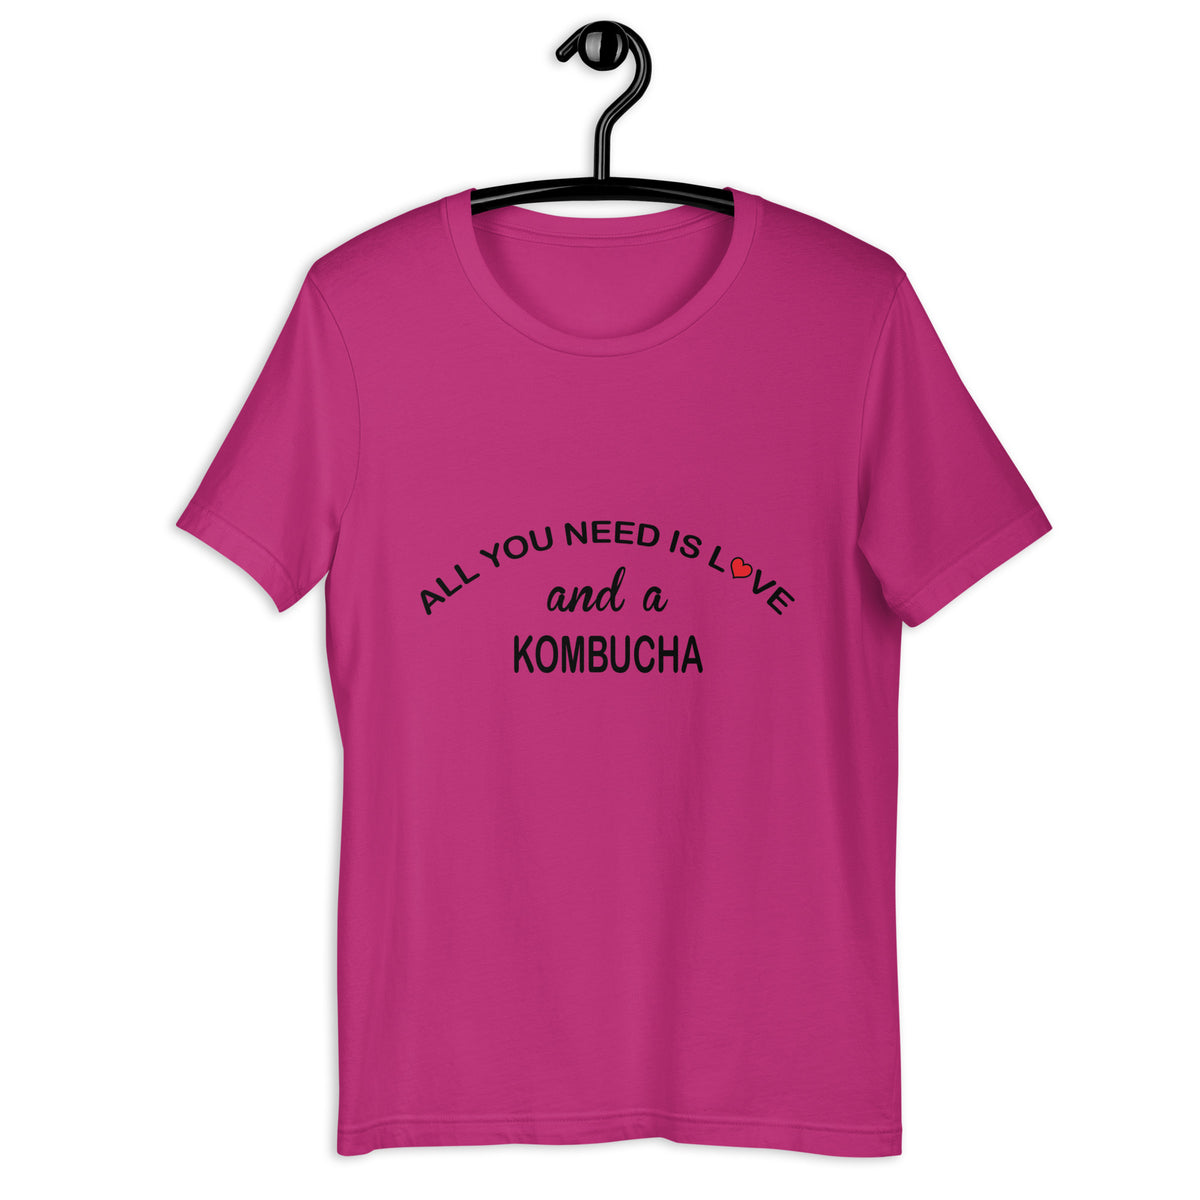 ALL YOU NEED IS LOVE...KOMBUCHA Colored t-shirt